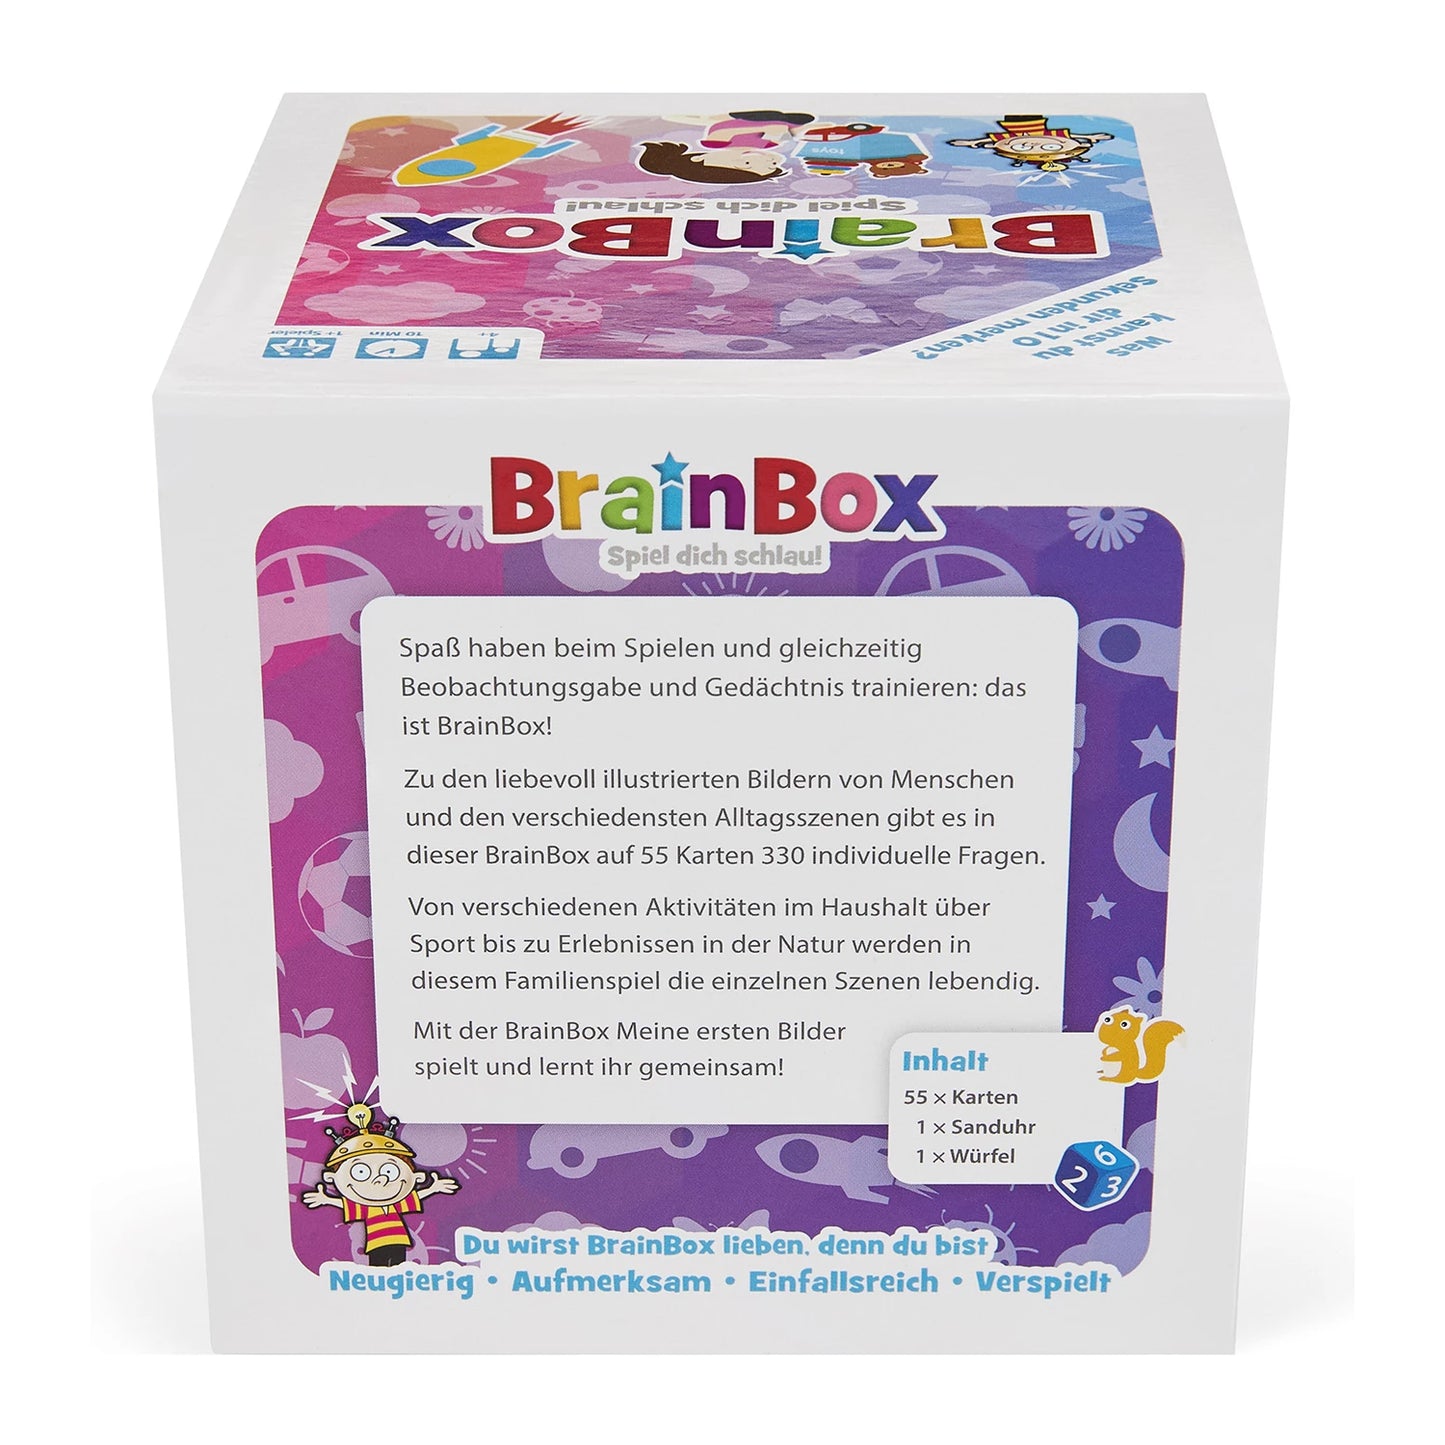 BrainBox - My first pictures